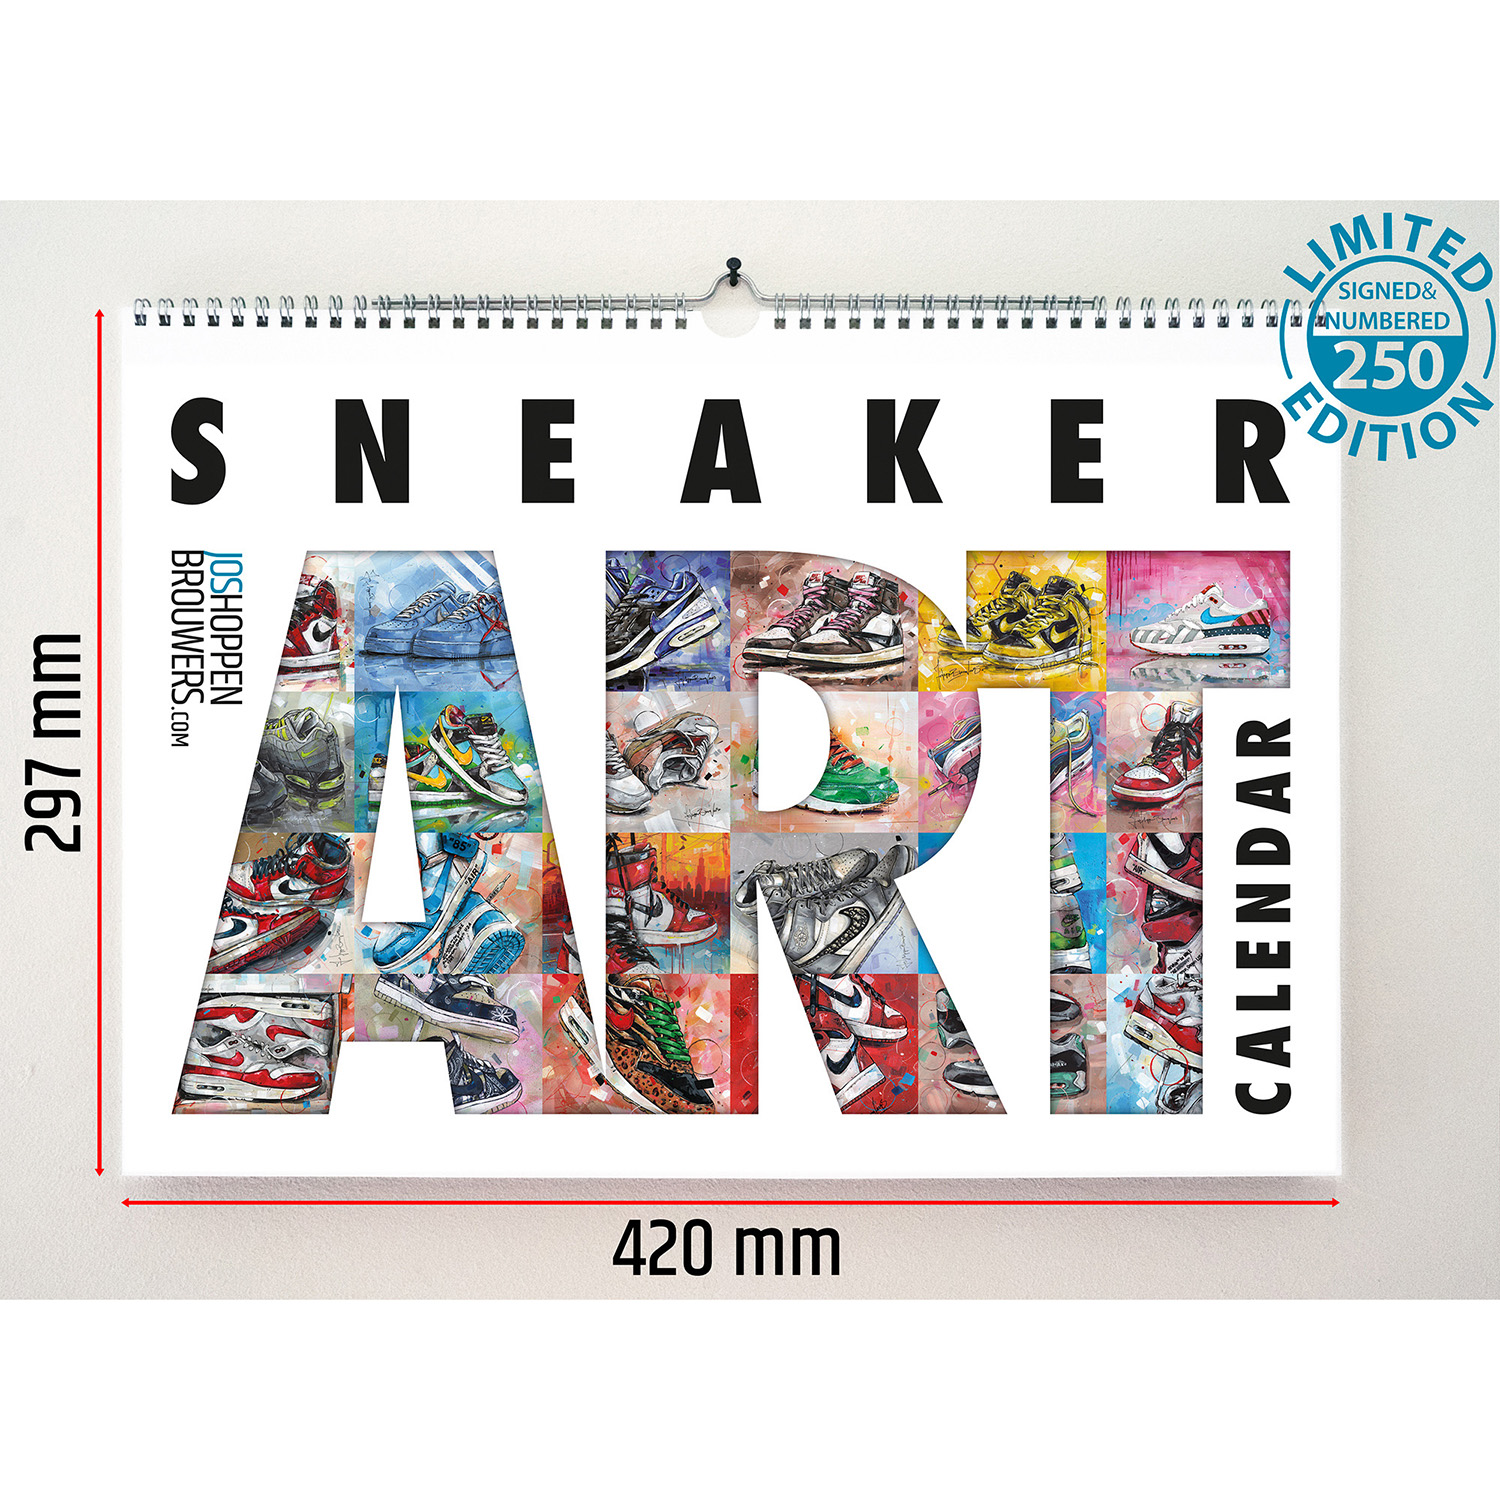 Prisoner abolish Human Nike sneaker art calendar (420x297mm) *edición limitada – Jos  Hoppenbrouwers art